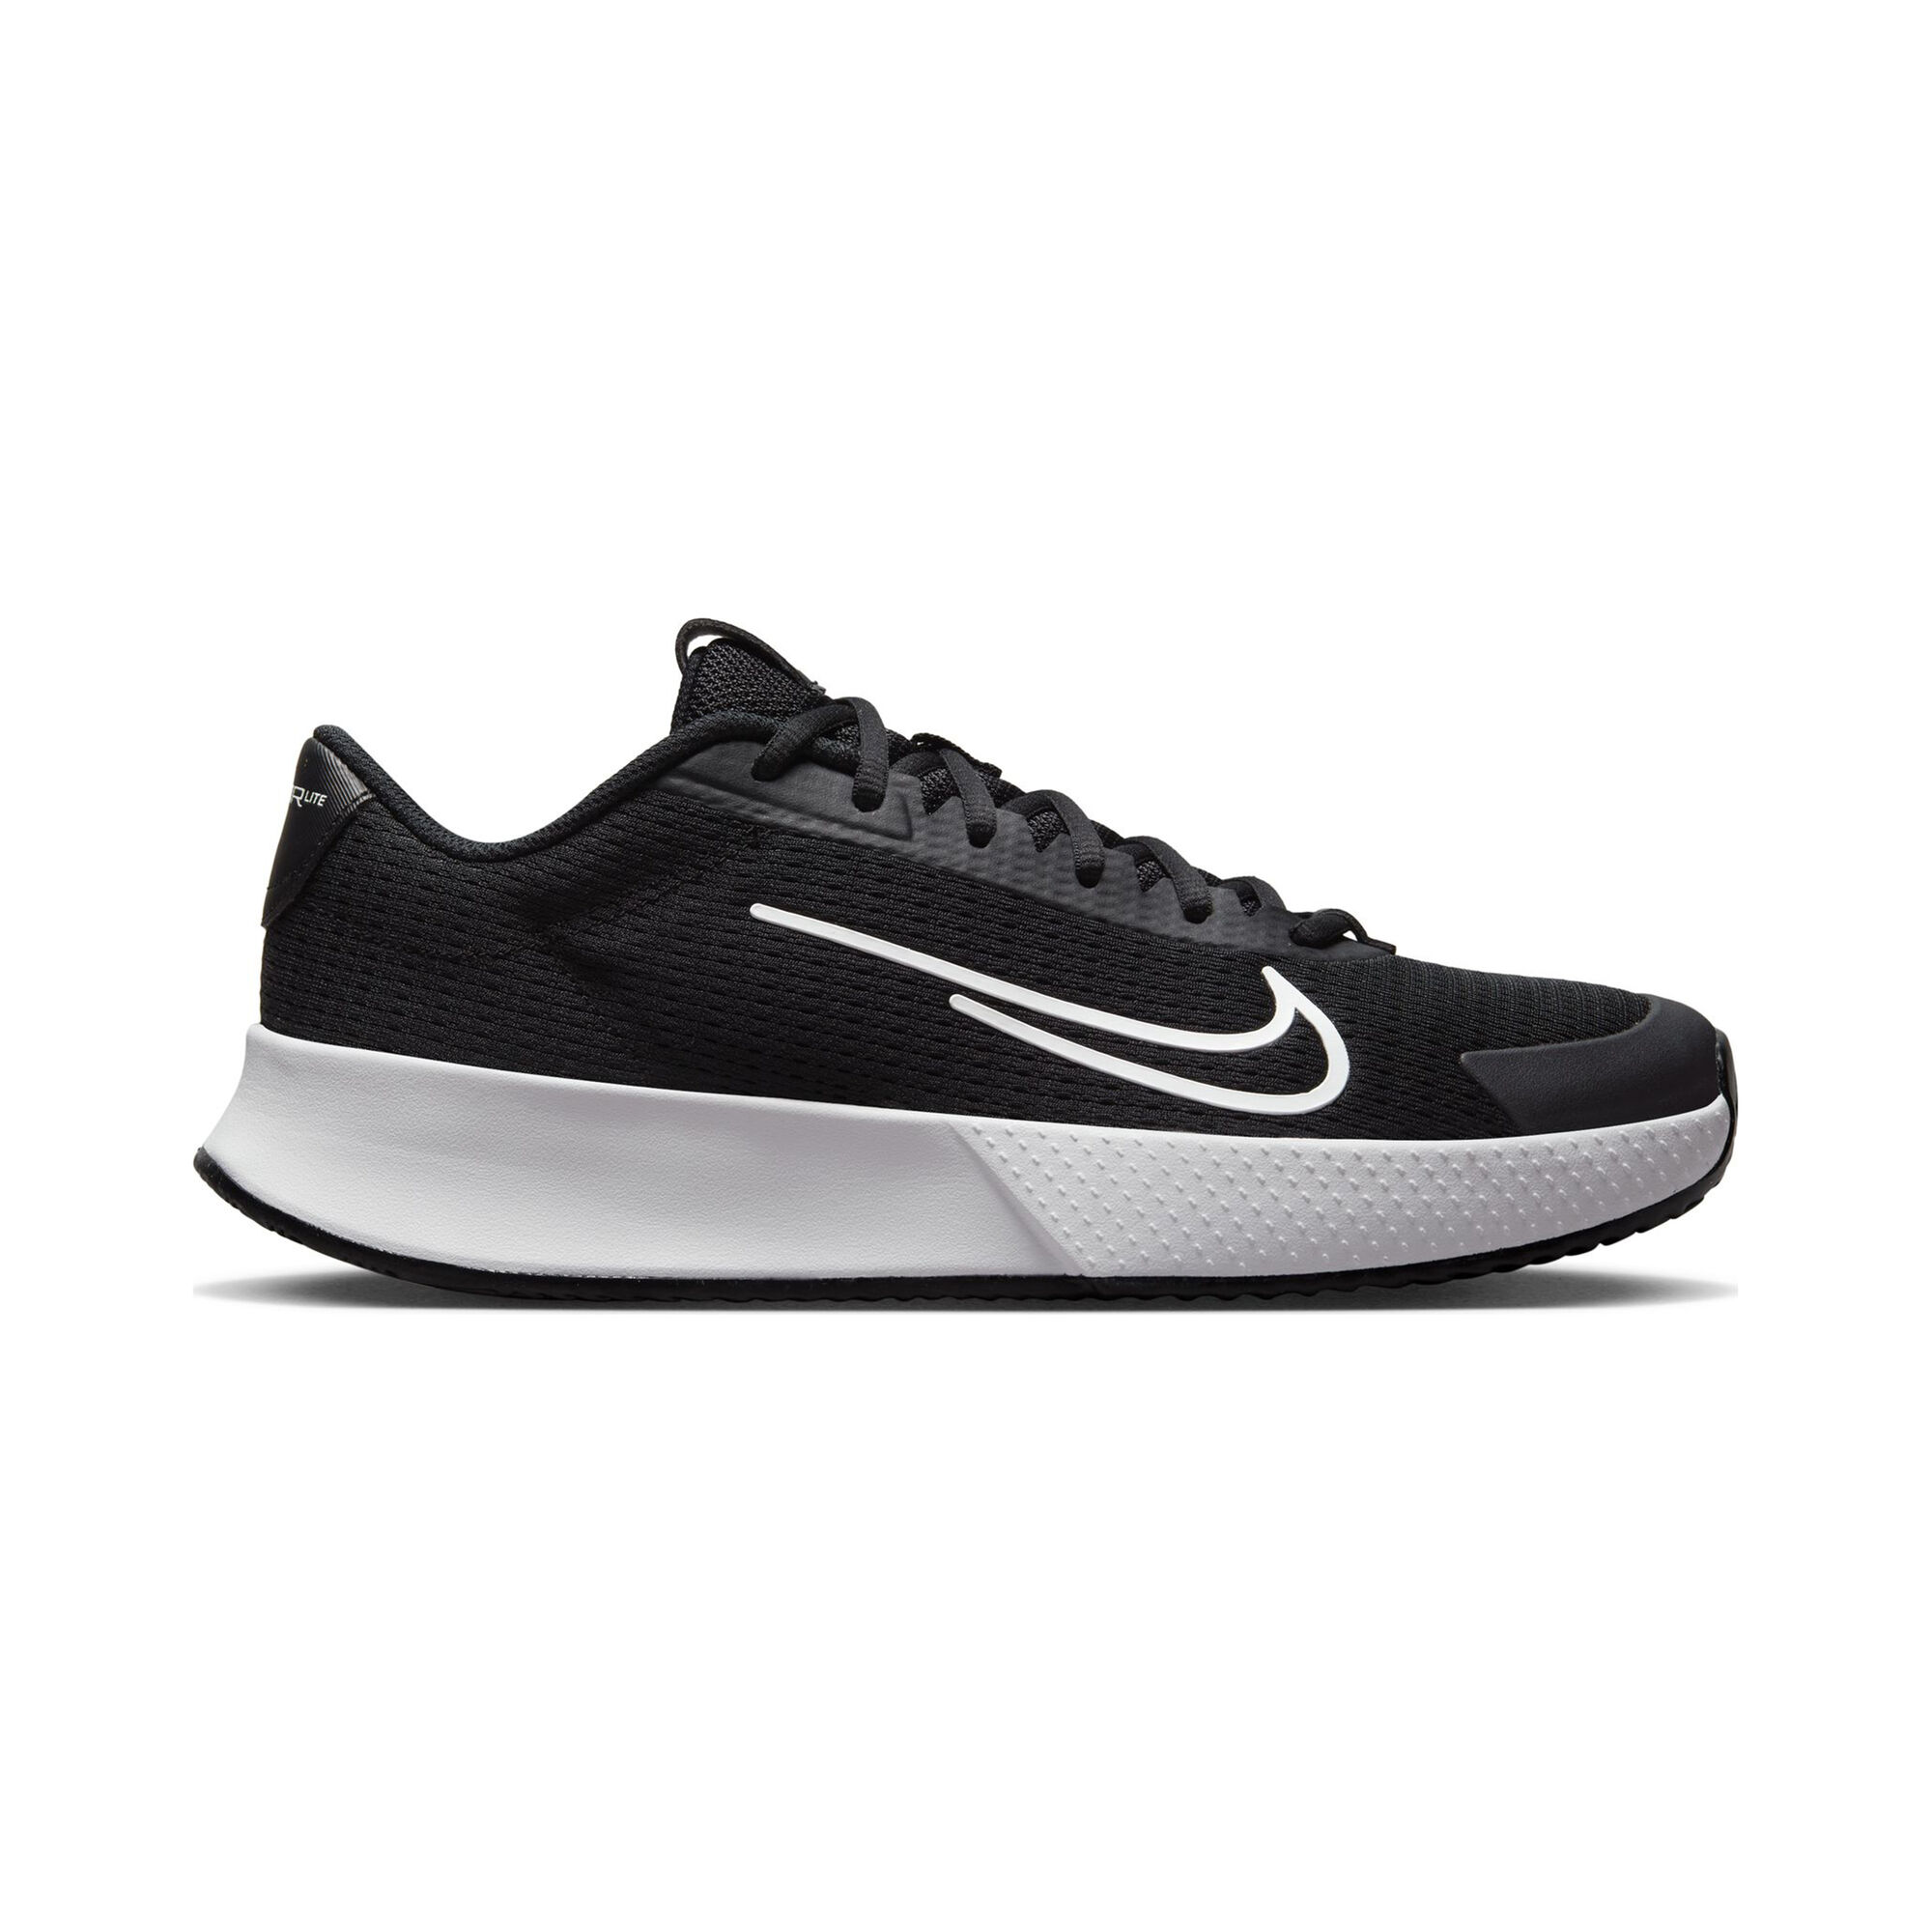 Chaussures Homme Nike Vapor Lite 2 Noir/Blanc - TERRE BATTUE